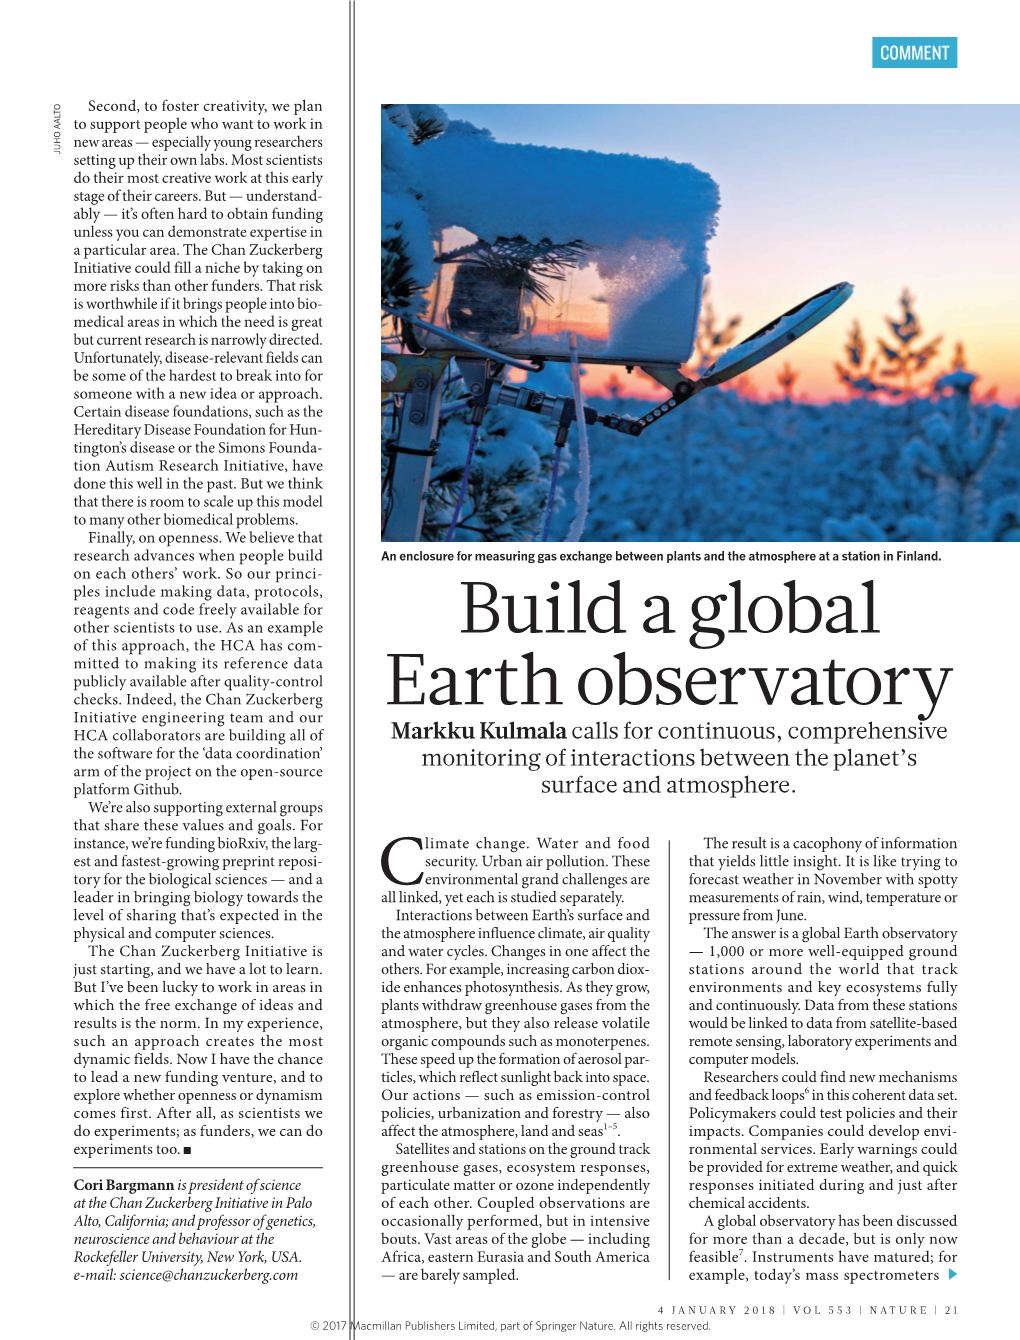 Build a Global Earth Observatory